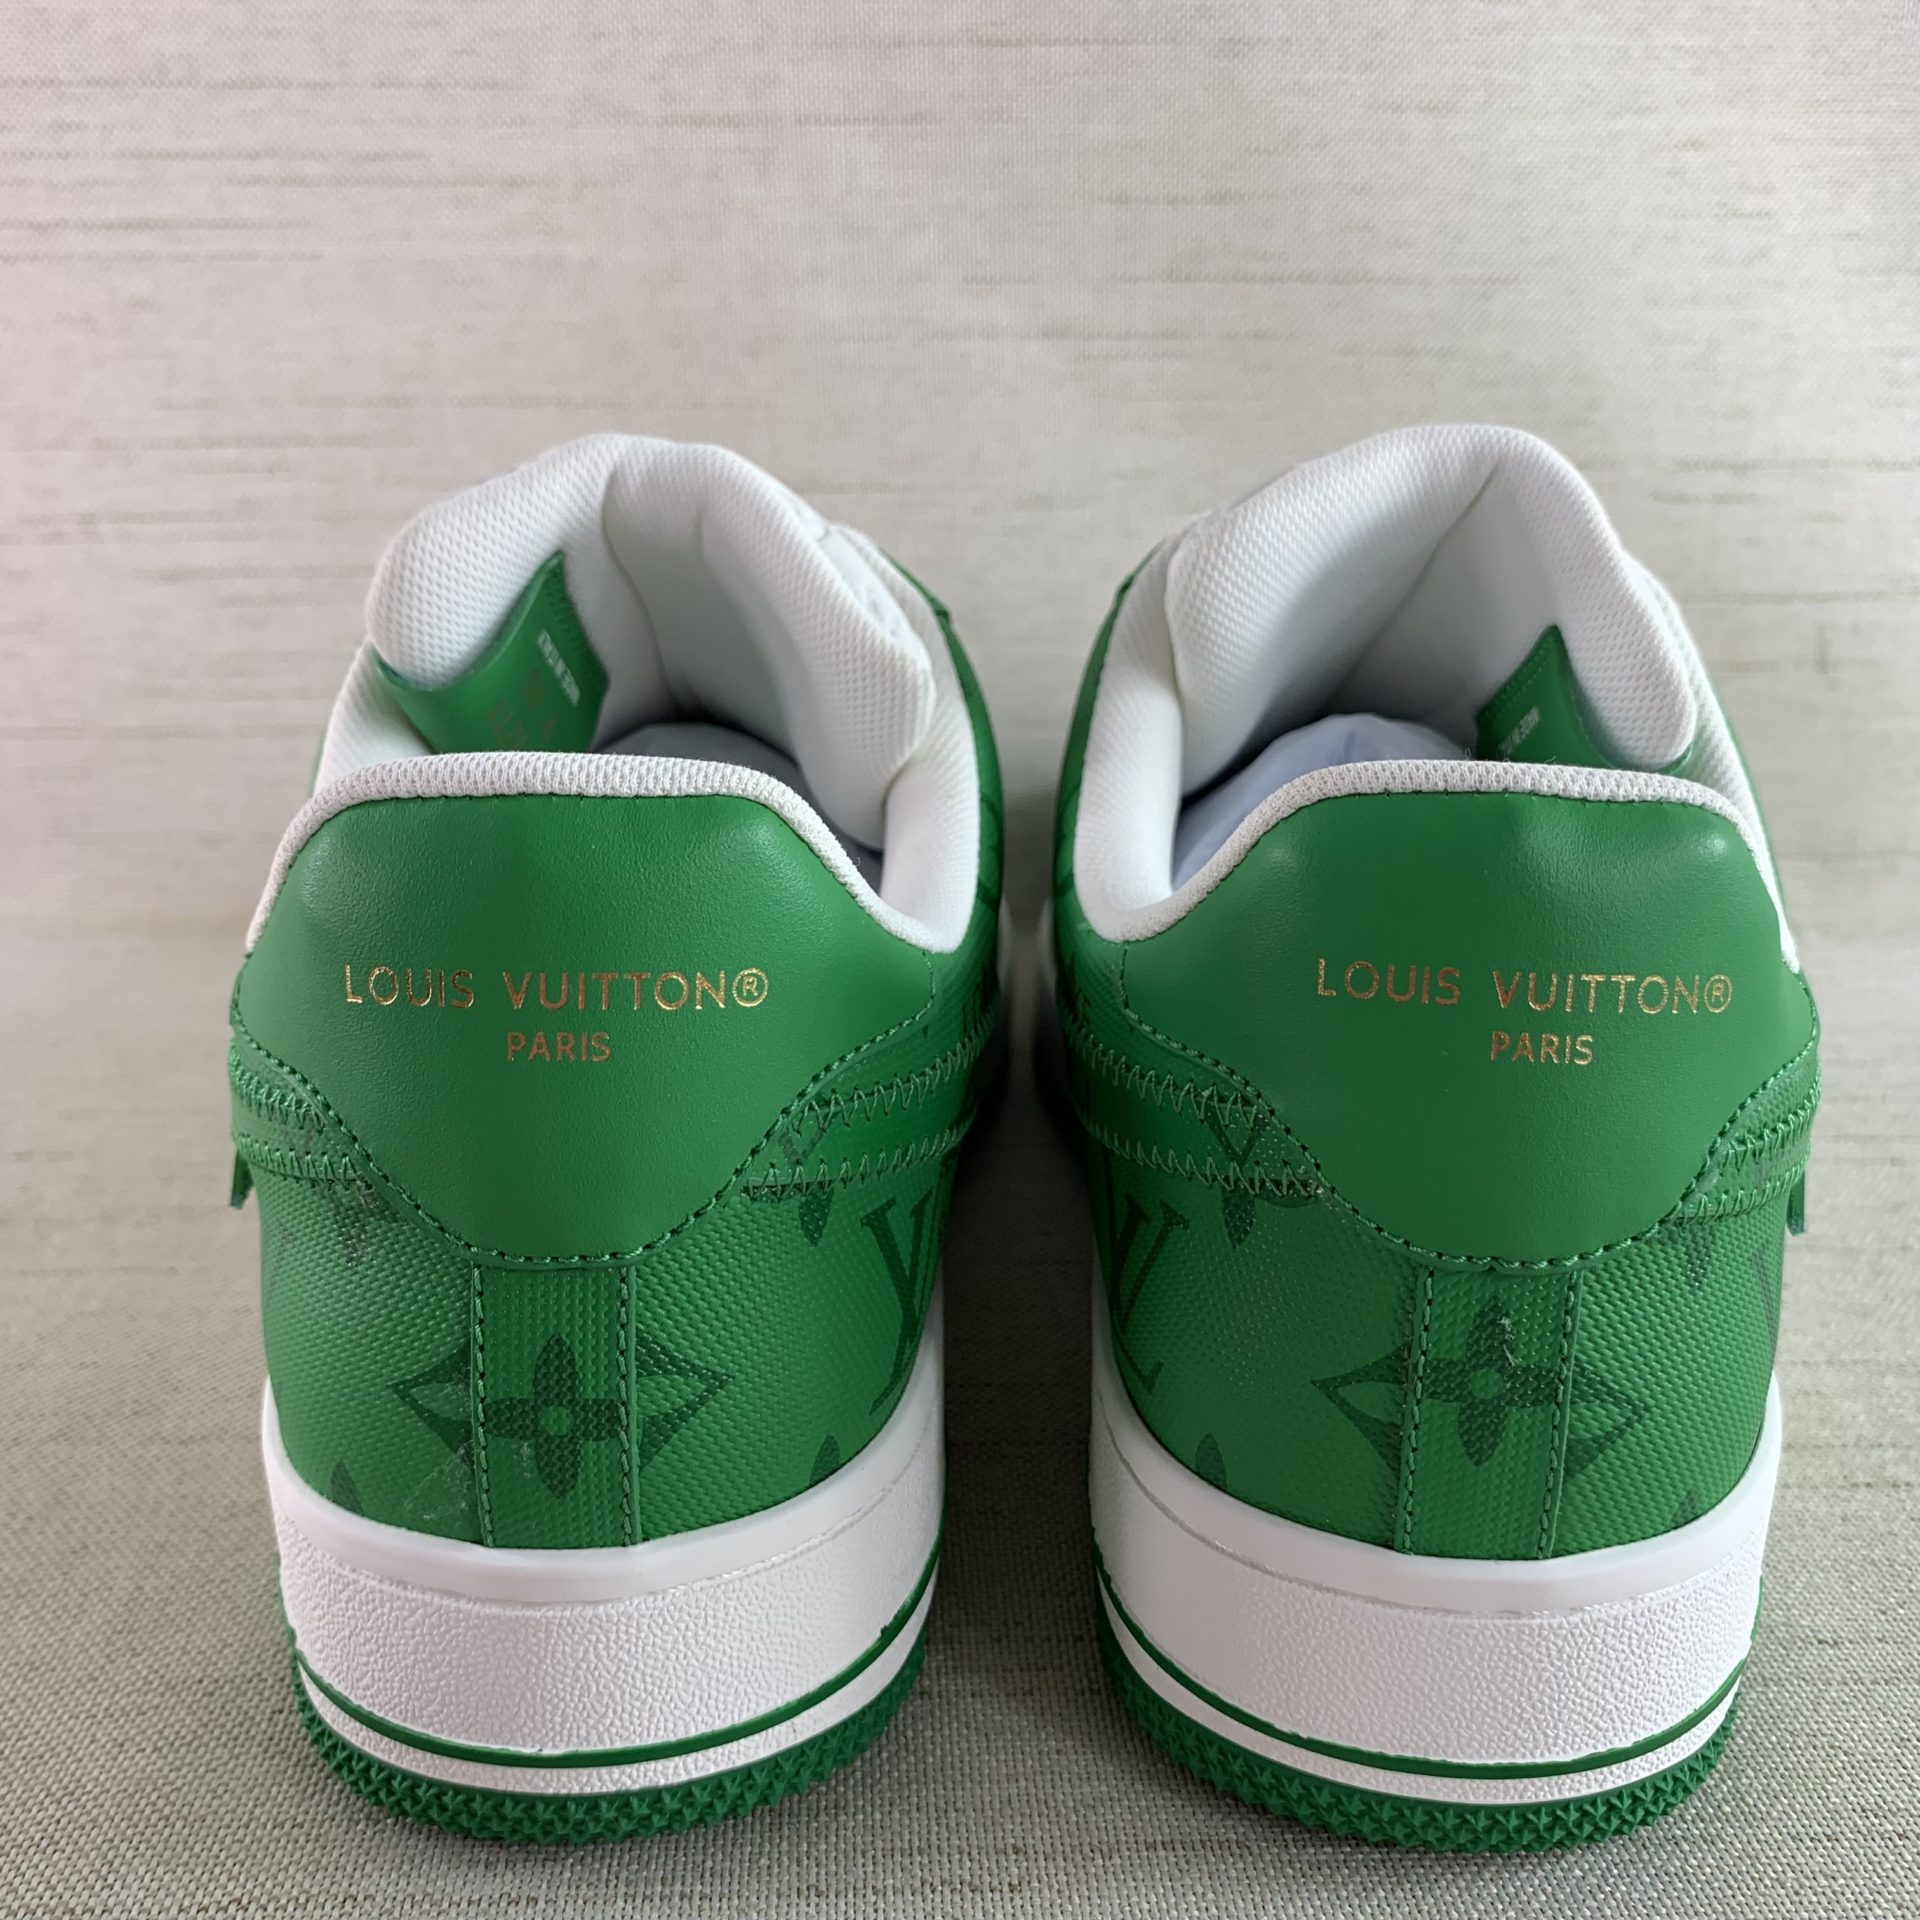 CultjerShops - Air Max 97 golf sneakers Green - LOUIS VUITTON X NIKE AIR  FORCE 1 LOW MONOGRAM BROWN DAMIER AZUR 2022